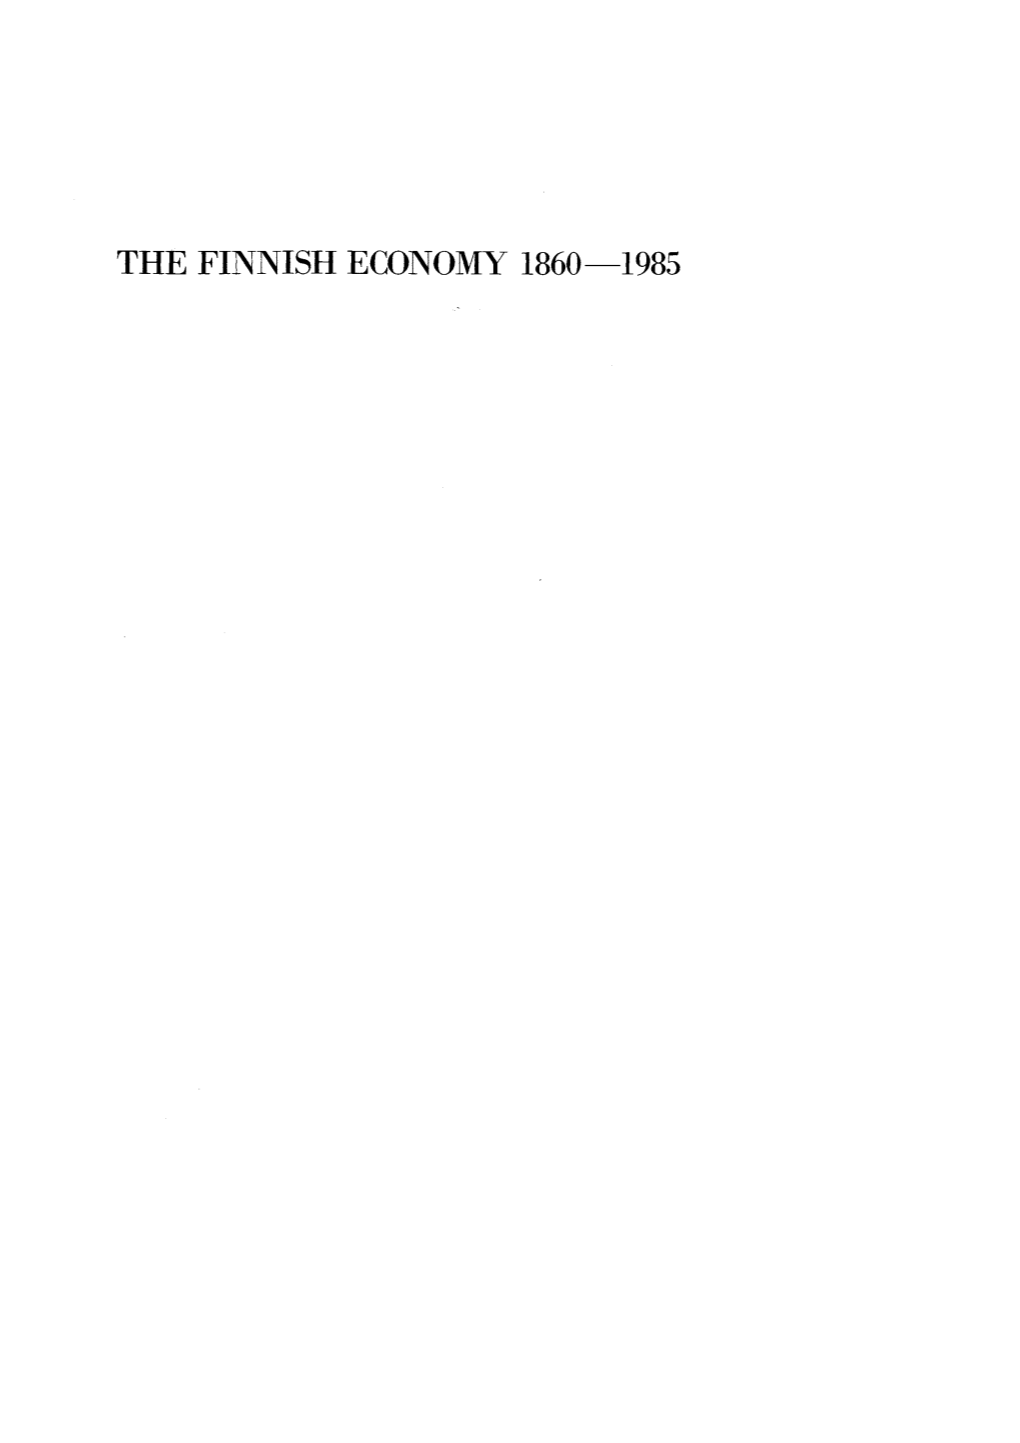 The Finnish Economy 1860 -1985